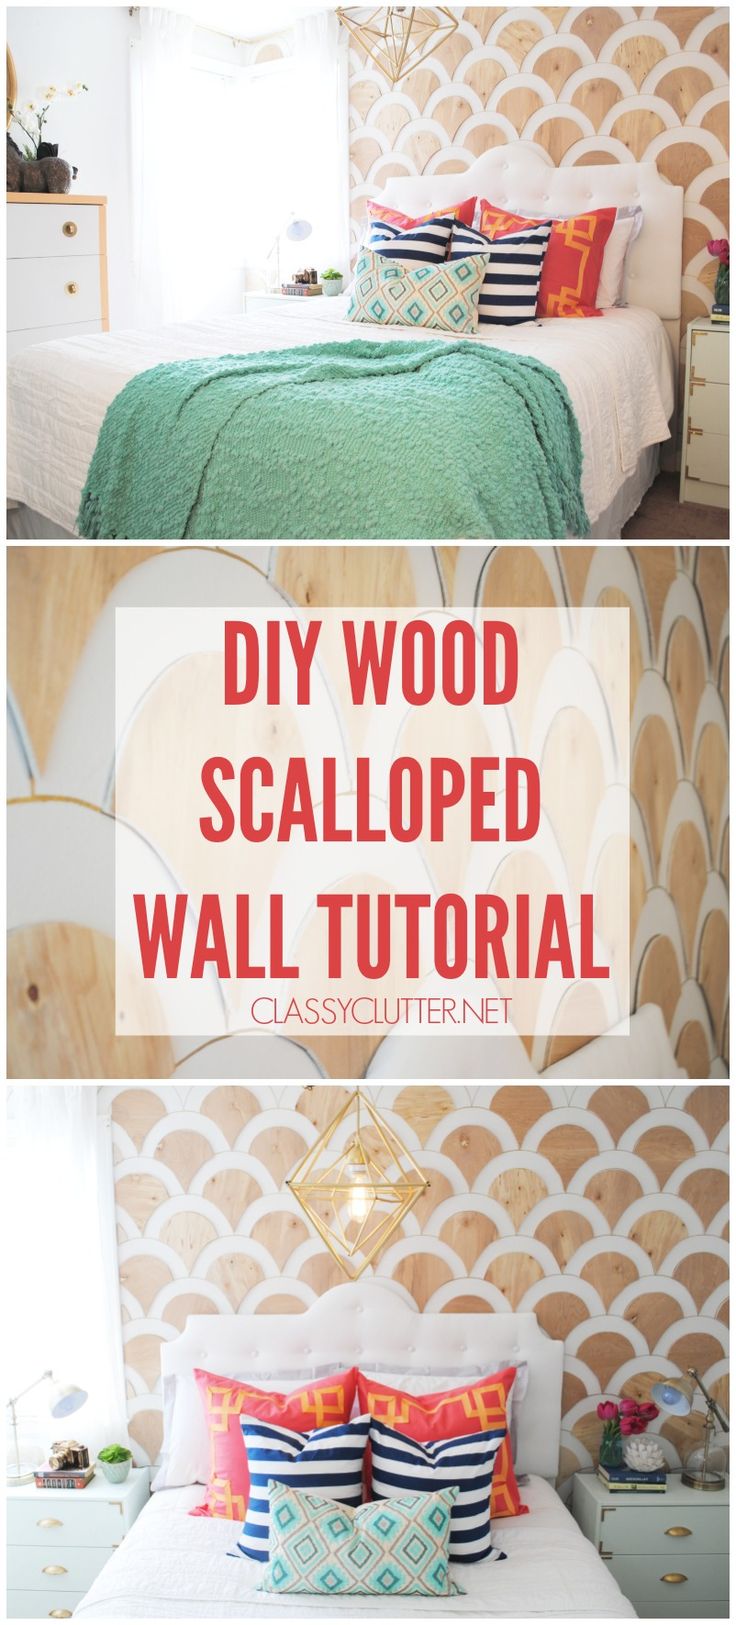 DIY Wood Scalloped Wall Tutorial